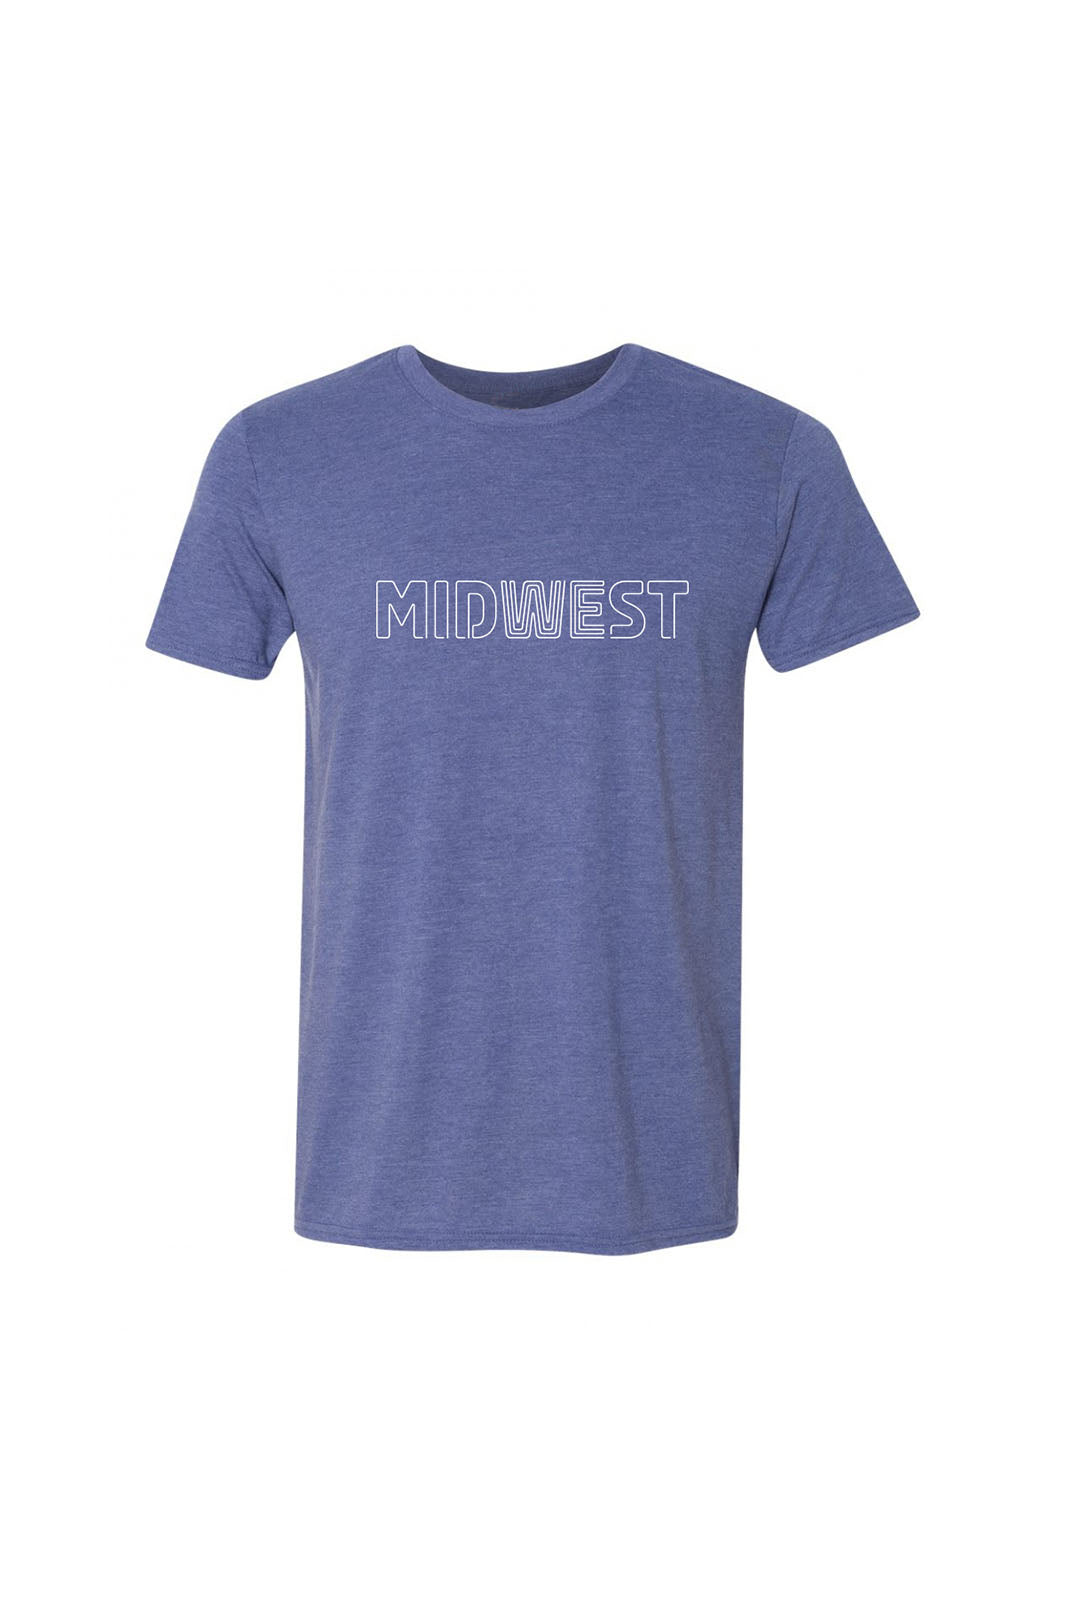 Midwest T-Shirt - Blue